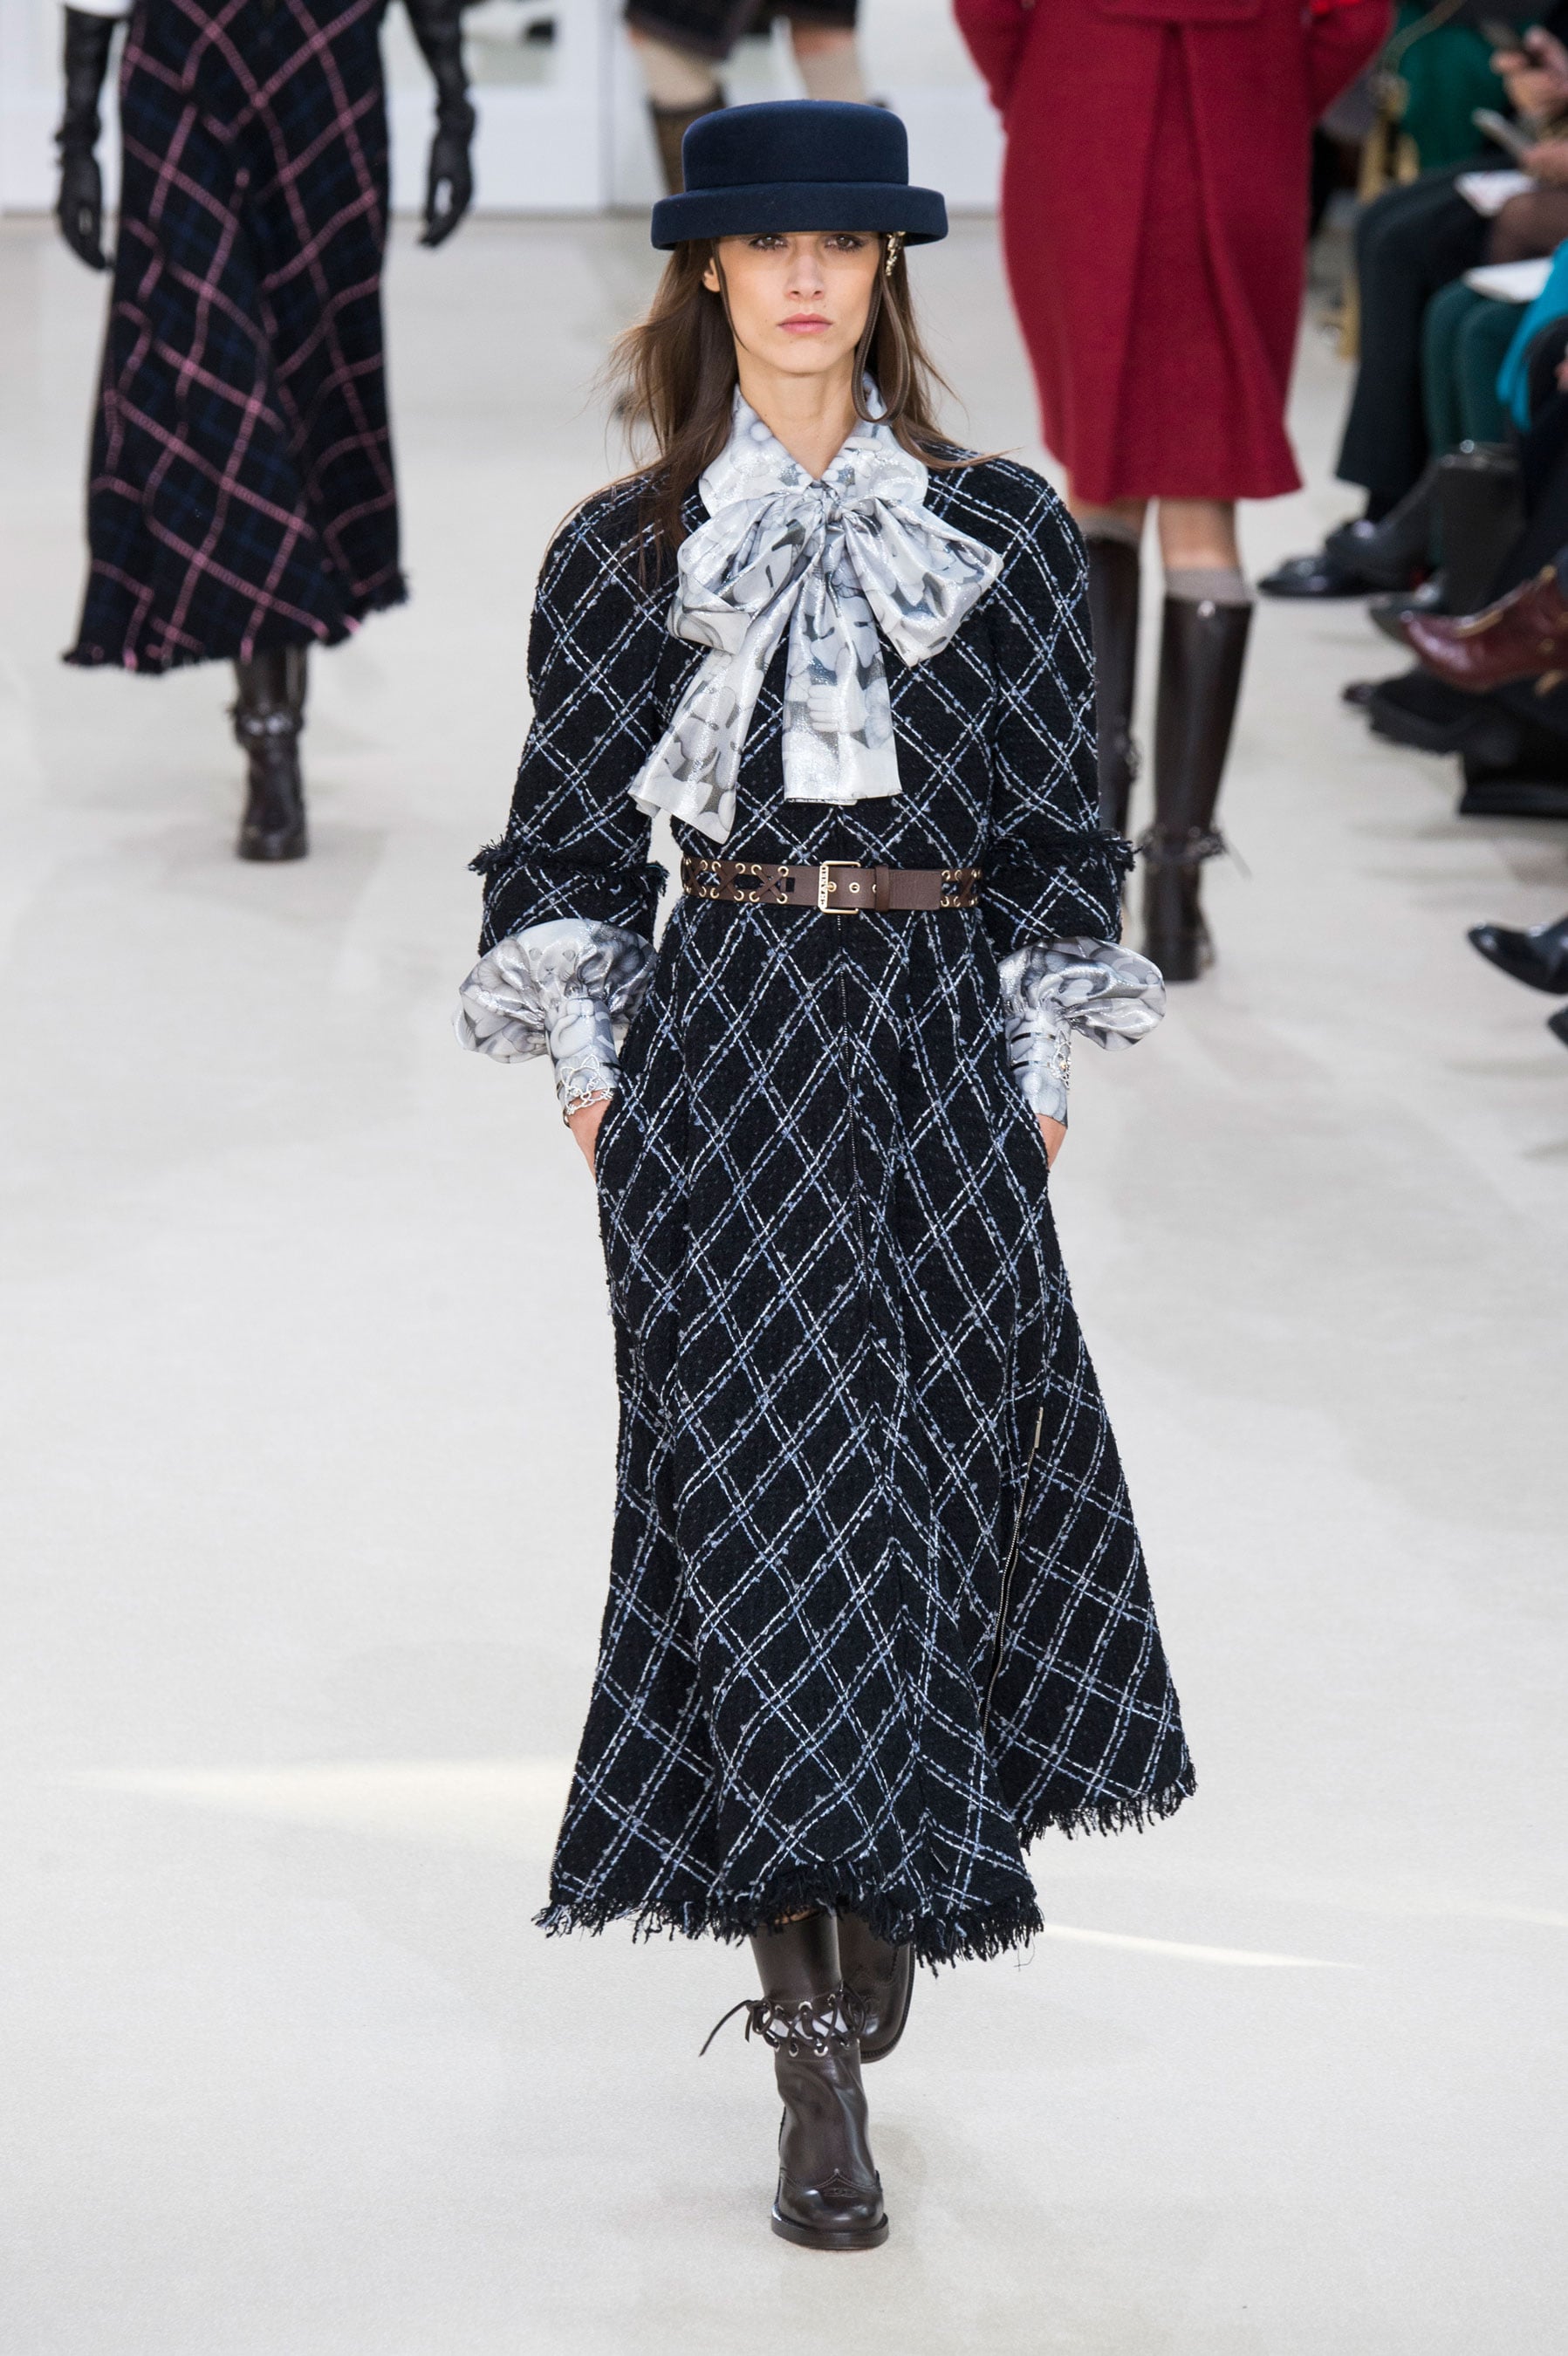 perzik Afhaalmaaltijd natuurlijk Fashion, Shopping & Style | Karl Lagerfeld Puts the Emphasis on Wearability  For Chanel Fall '16 | POPSUGAR Fashion Photo 20